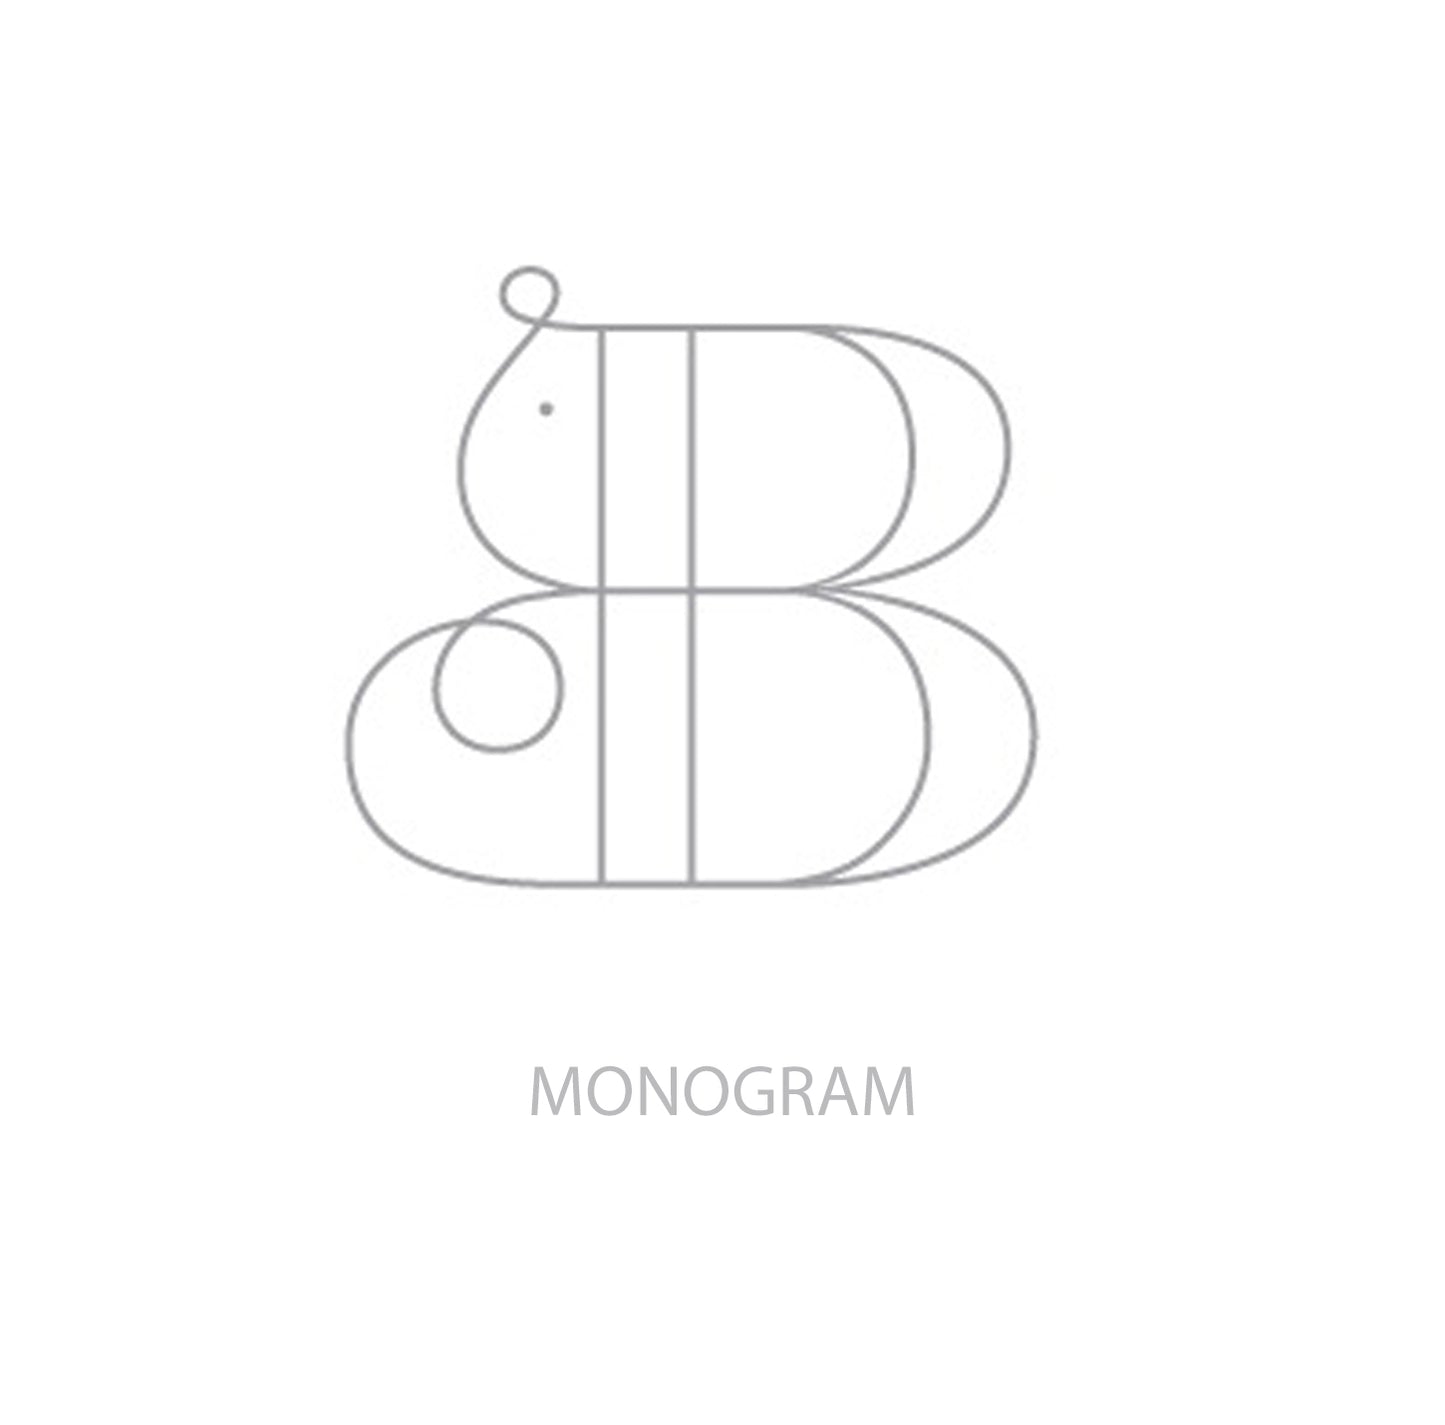 Monogram - Graphic